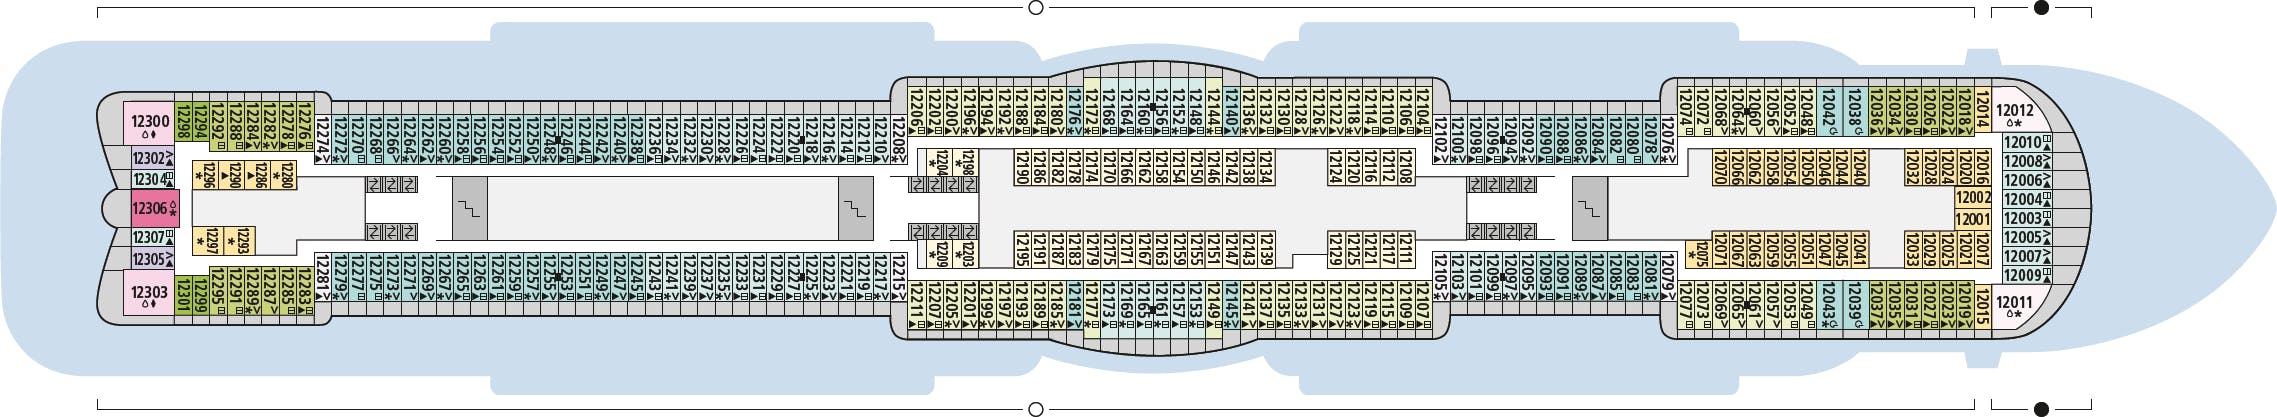 AIDAcosma - AIDA Cruises - Deck 12 (Deck 12)